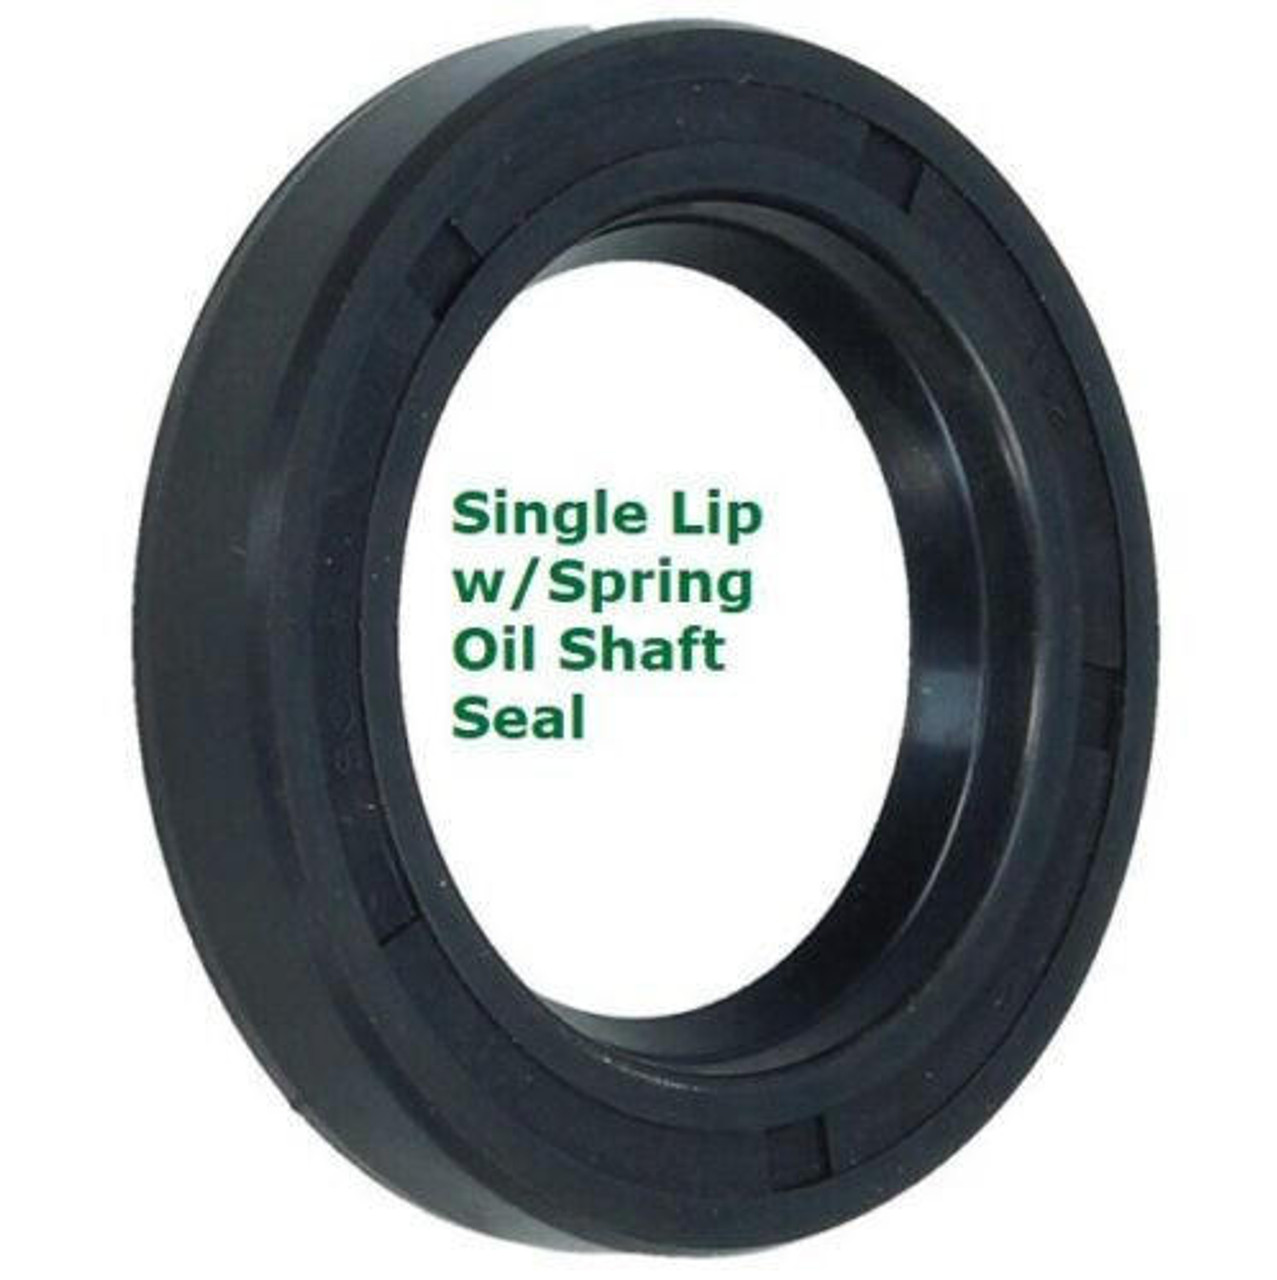 Metric Oil Shaft Seal 75 x 105 x 12mm Single Lip   Price for 1 pc